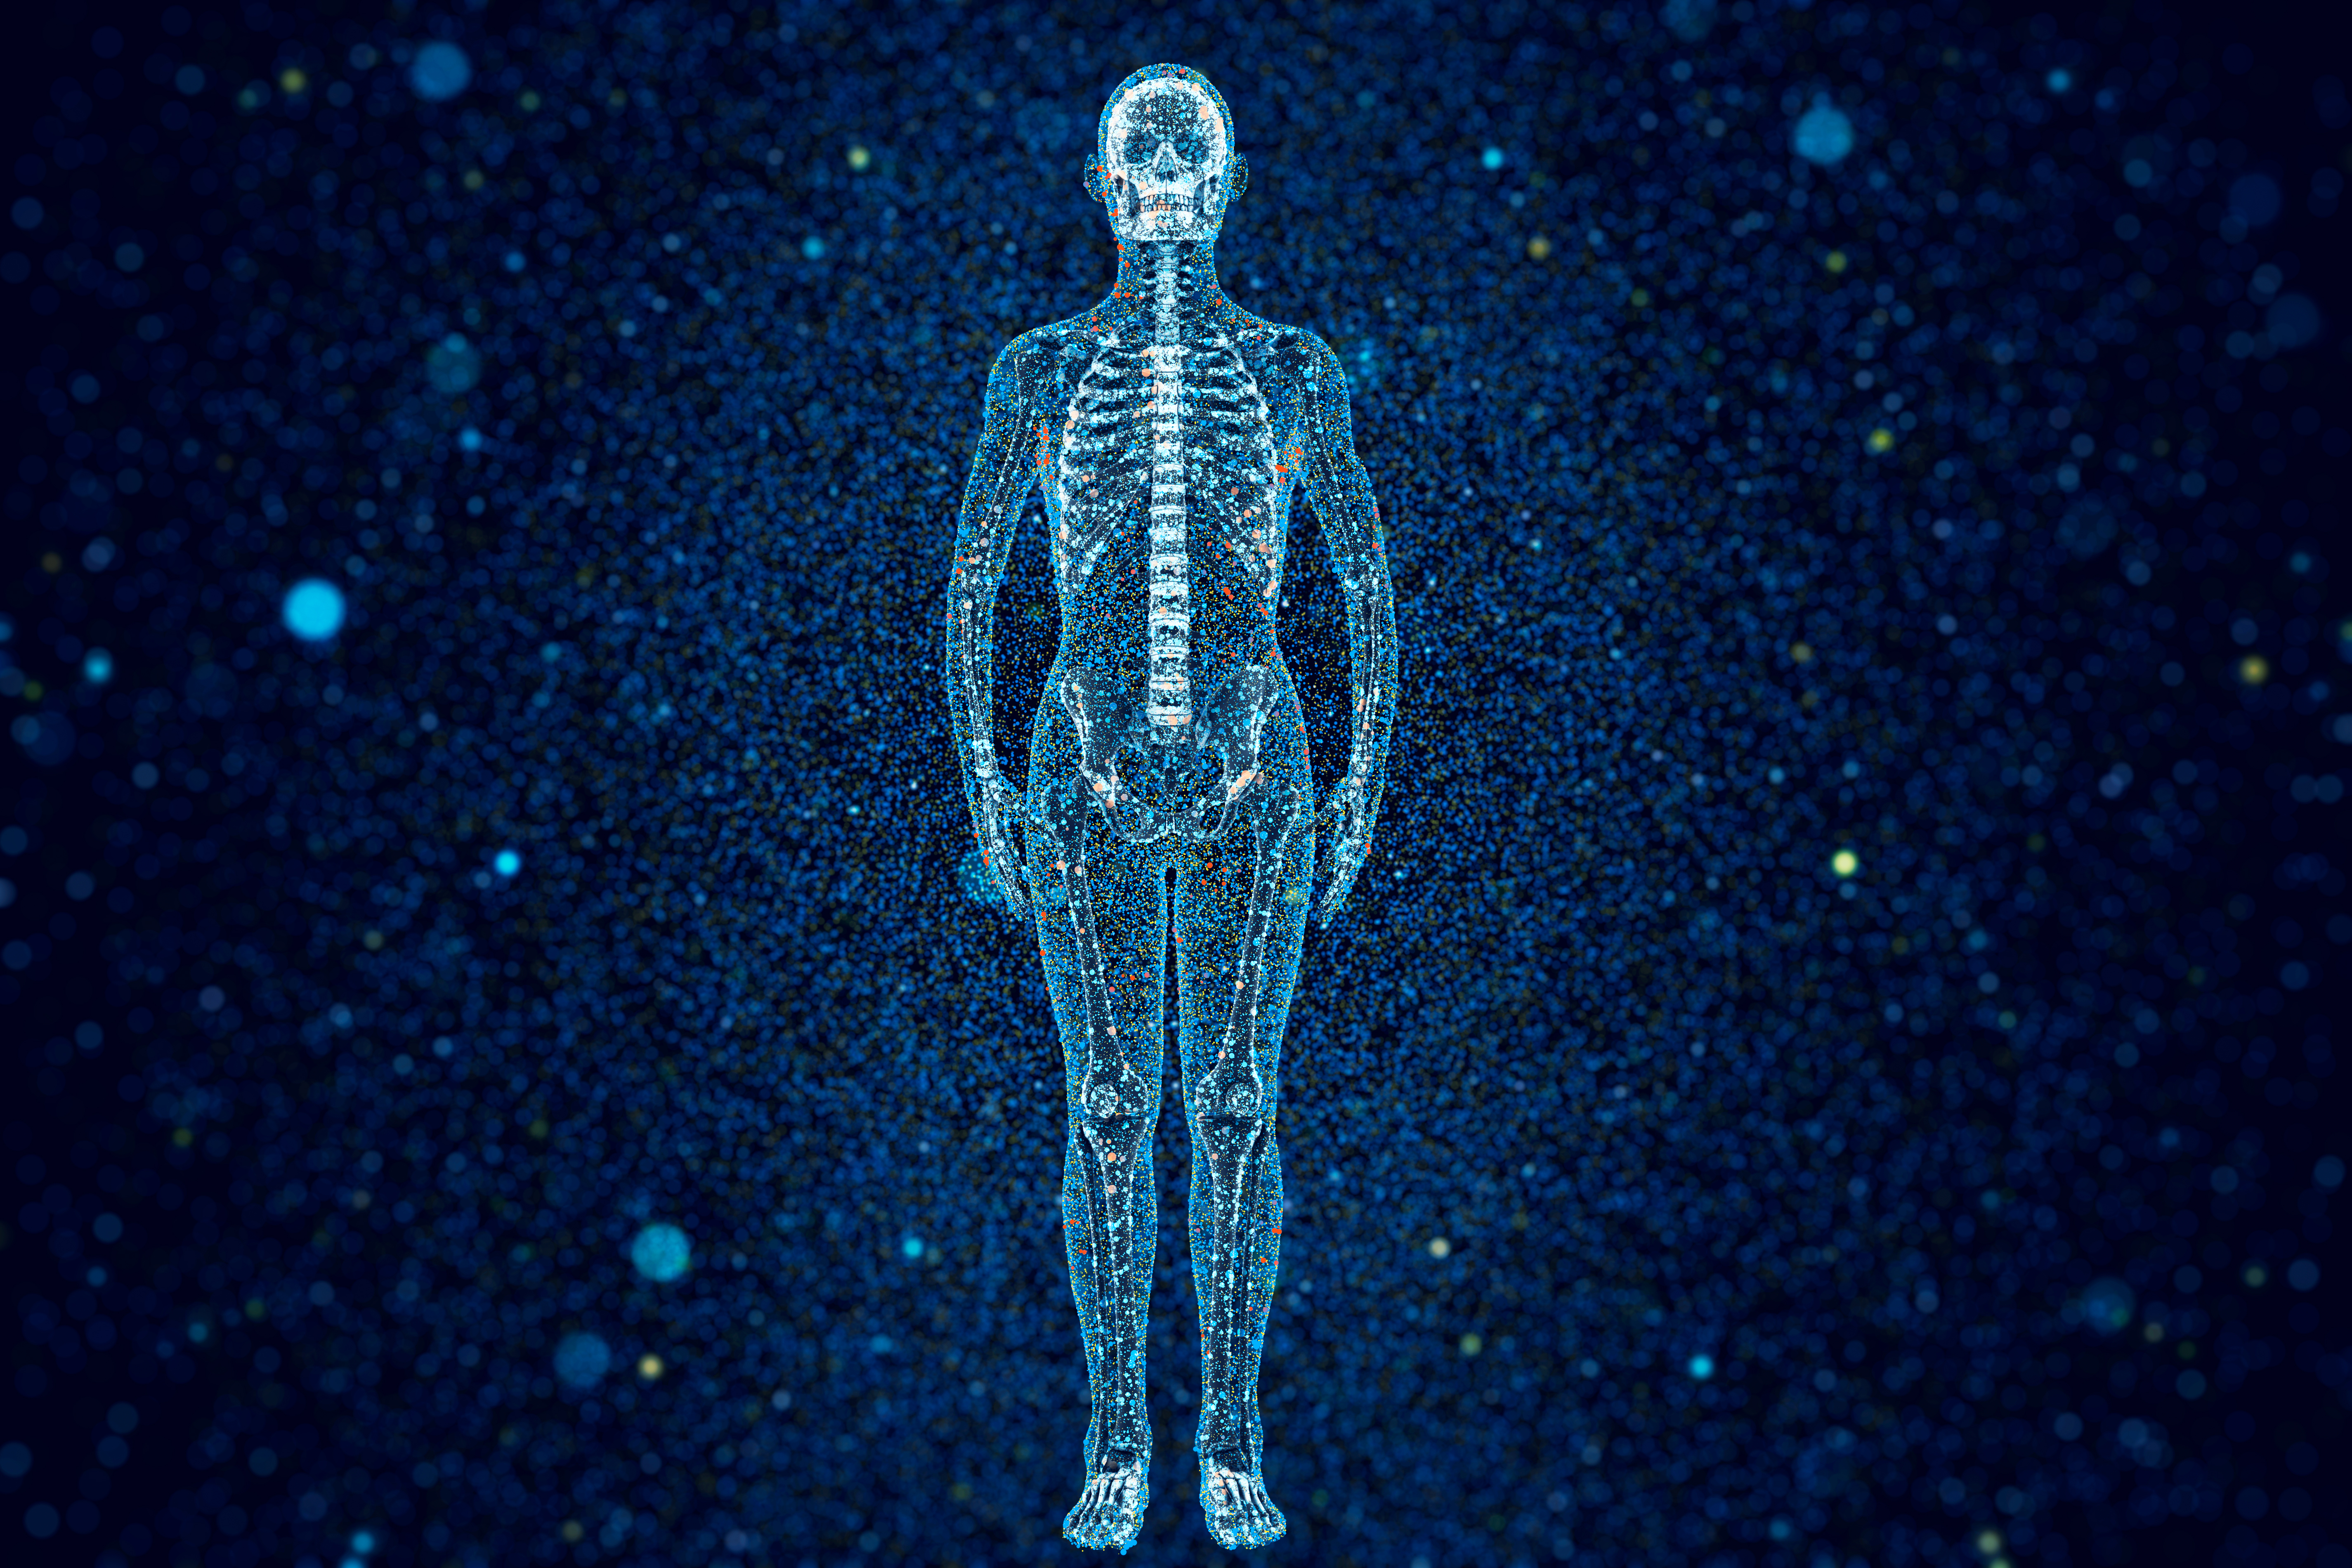 X-Ray-like image of a full-length human body